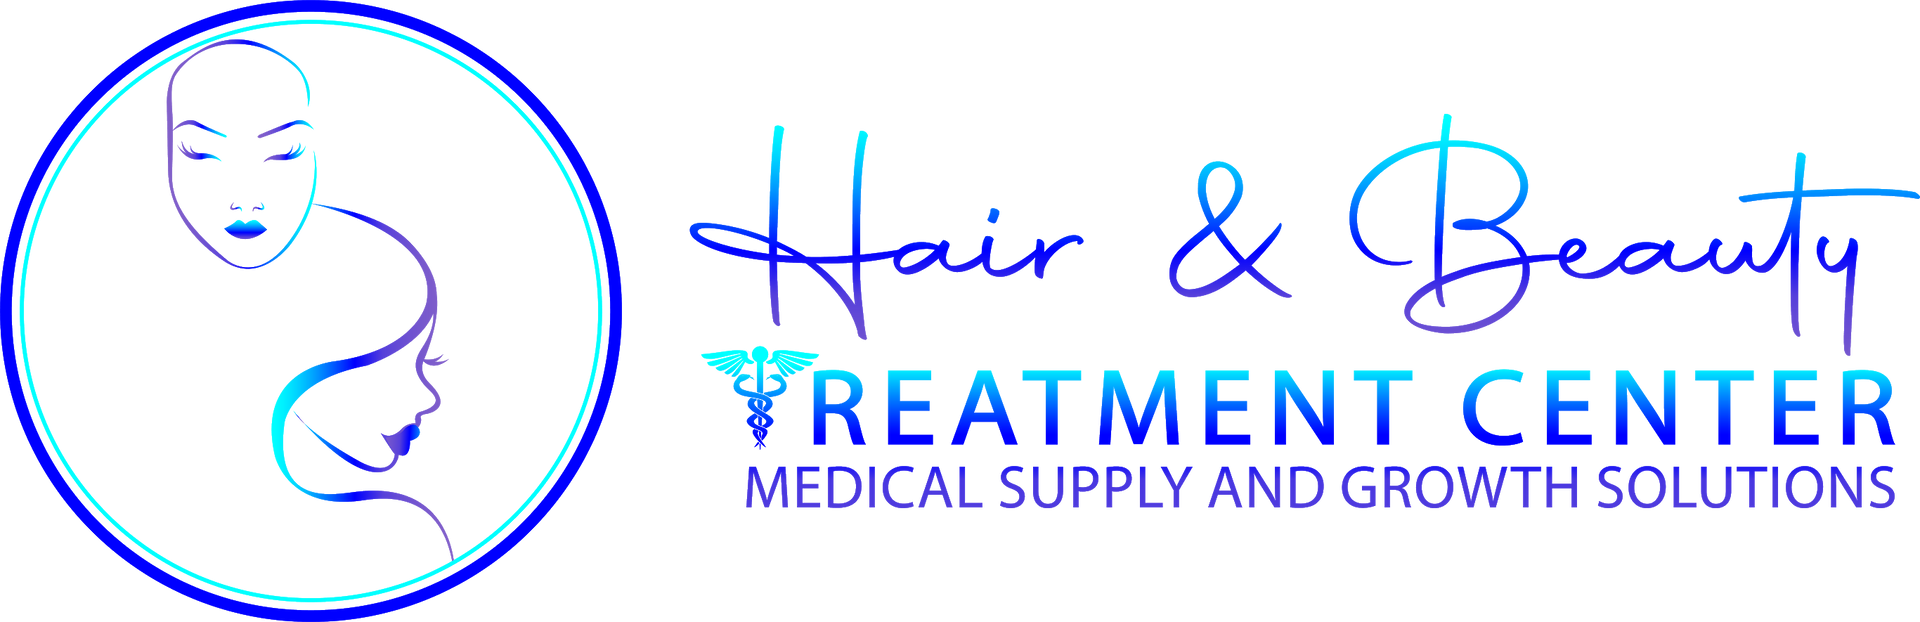 Hair & Beauty Treatment Center Logo